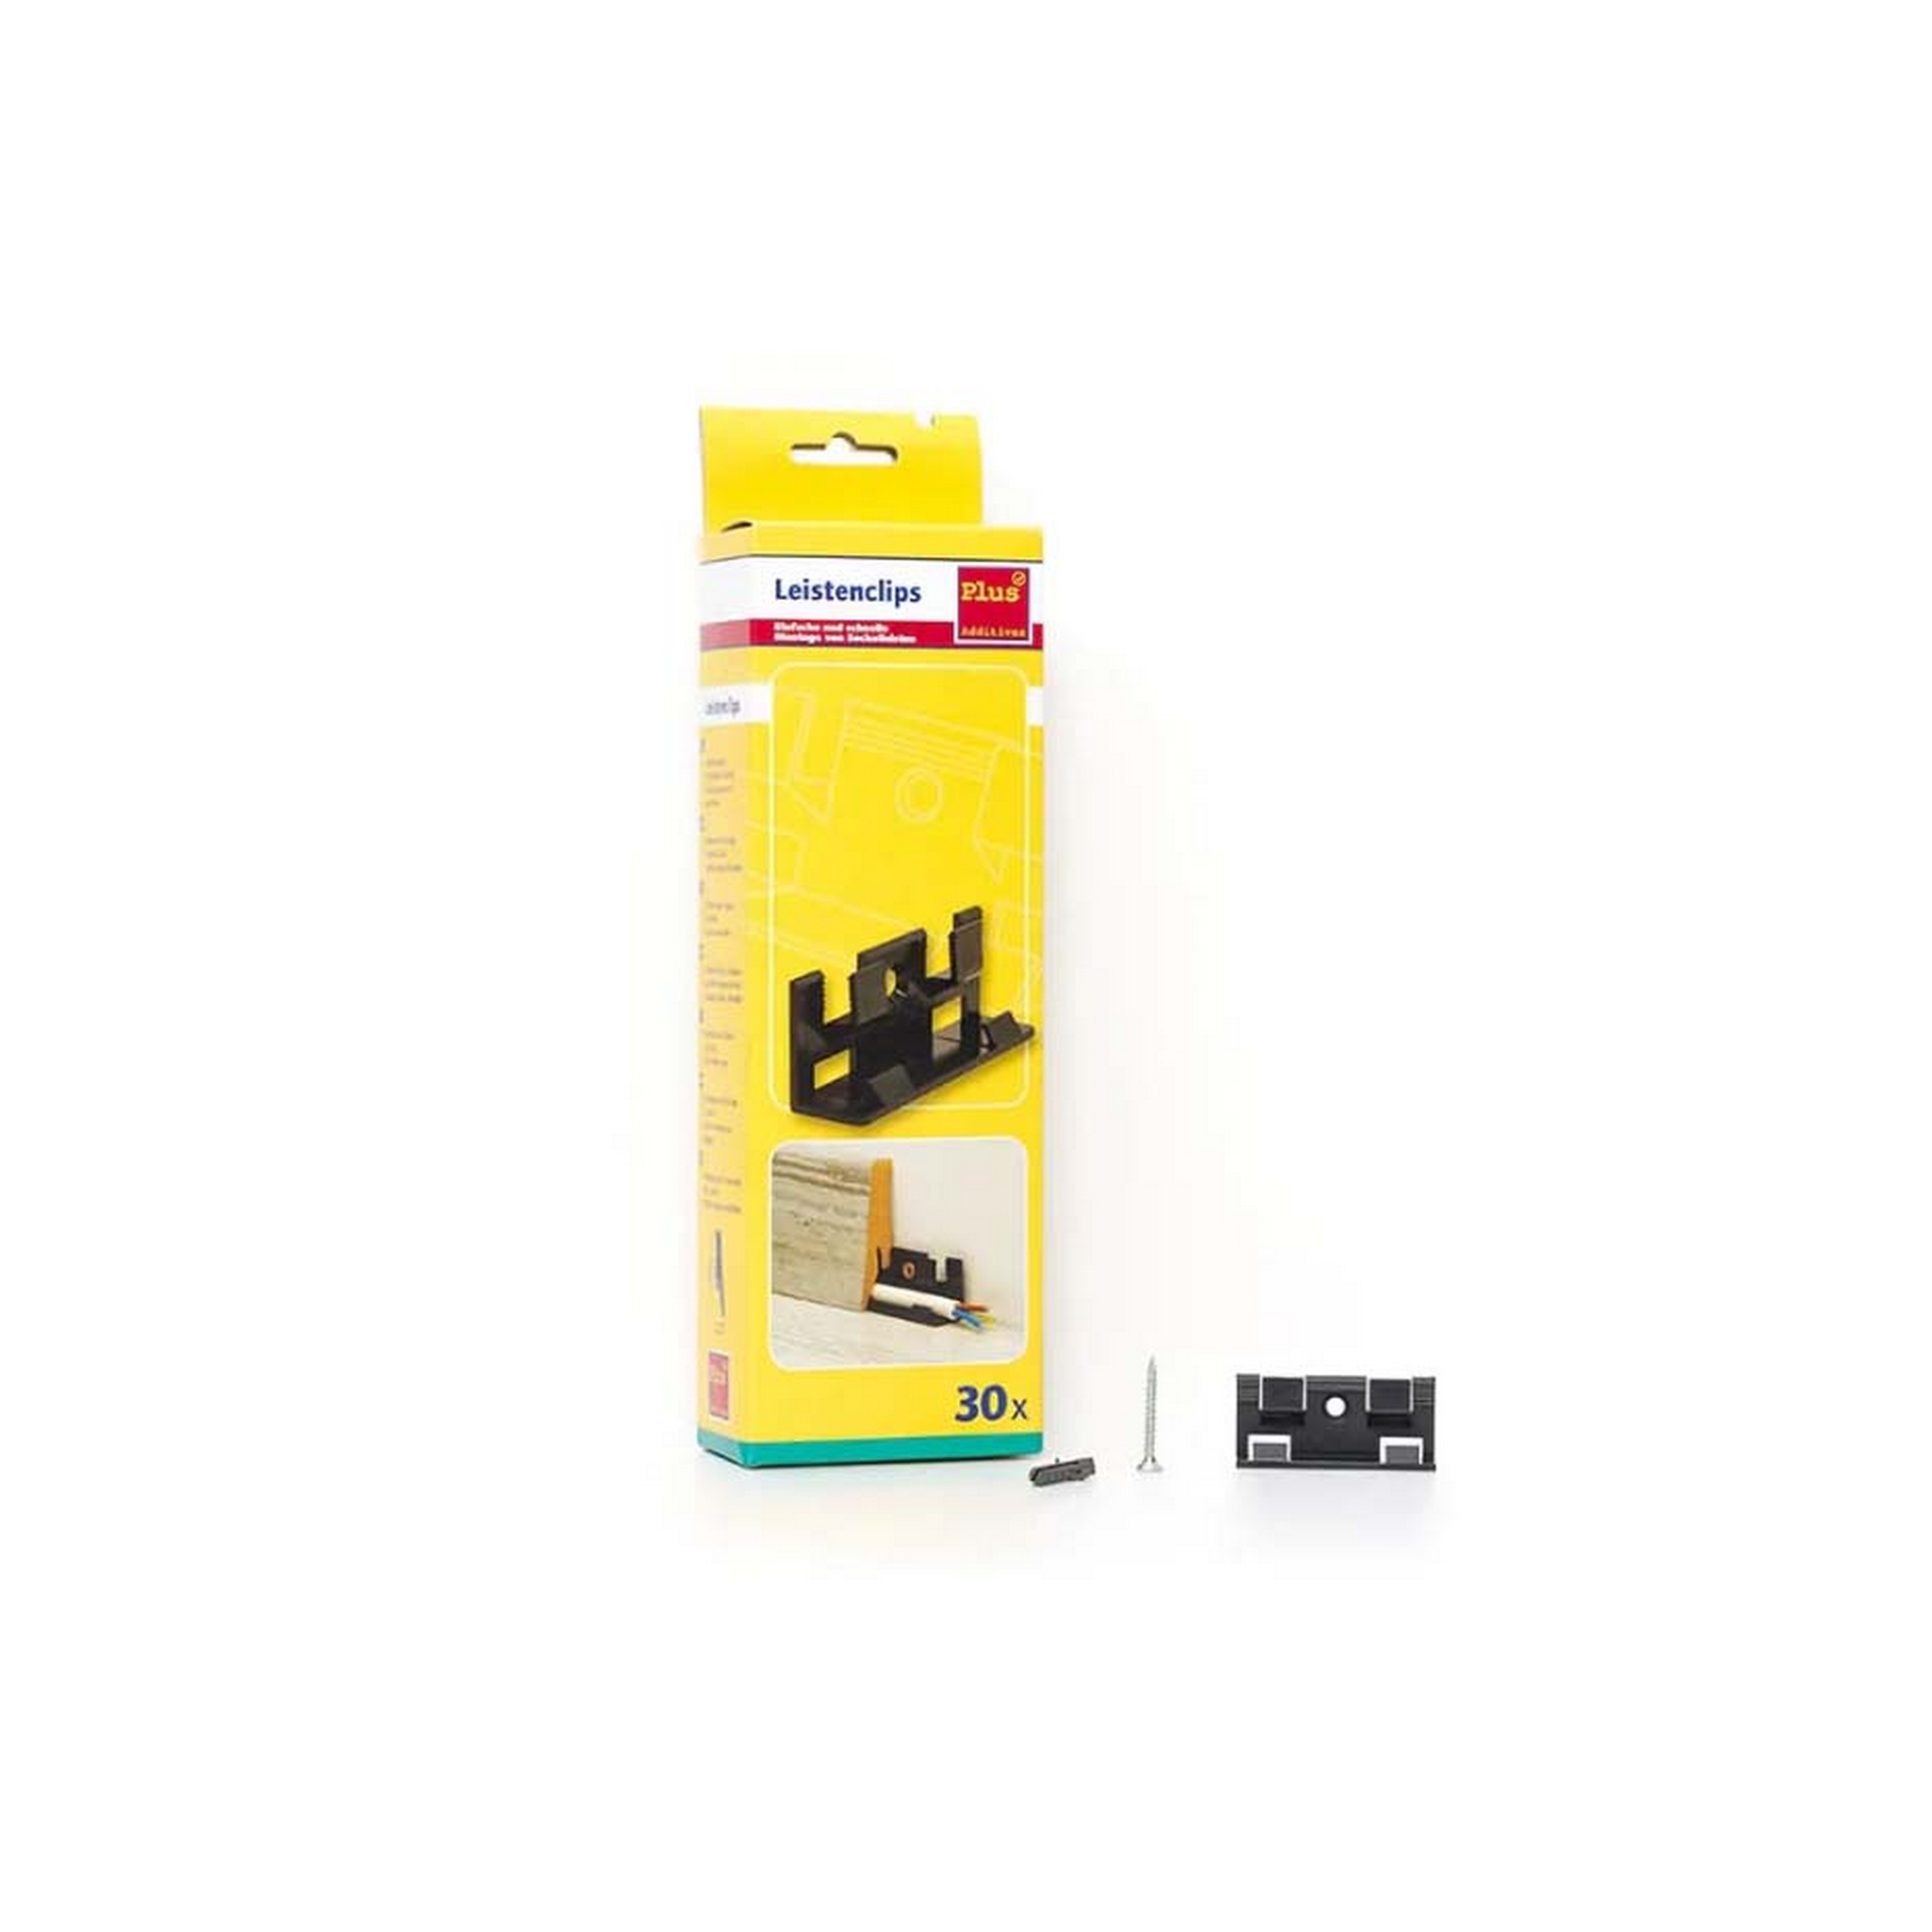 Leistenclips 'Plus' 5,8 x 1,9 cm, 30 Stück + product picture